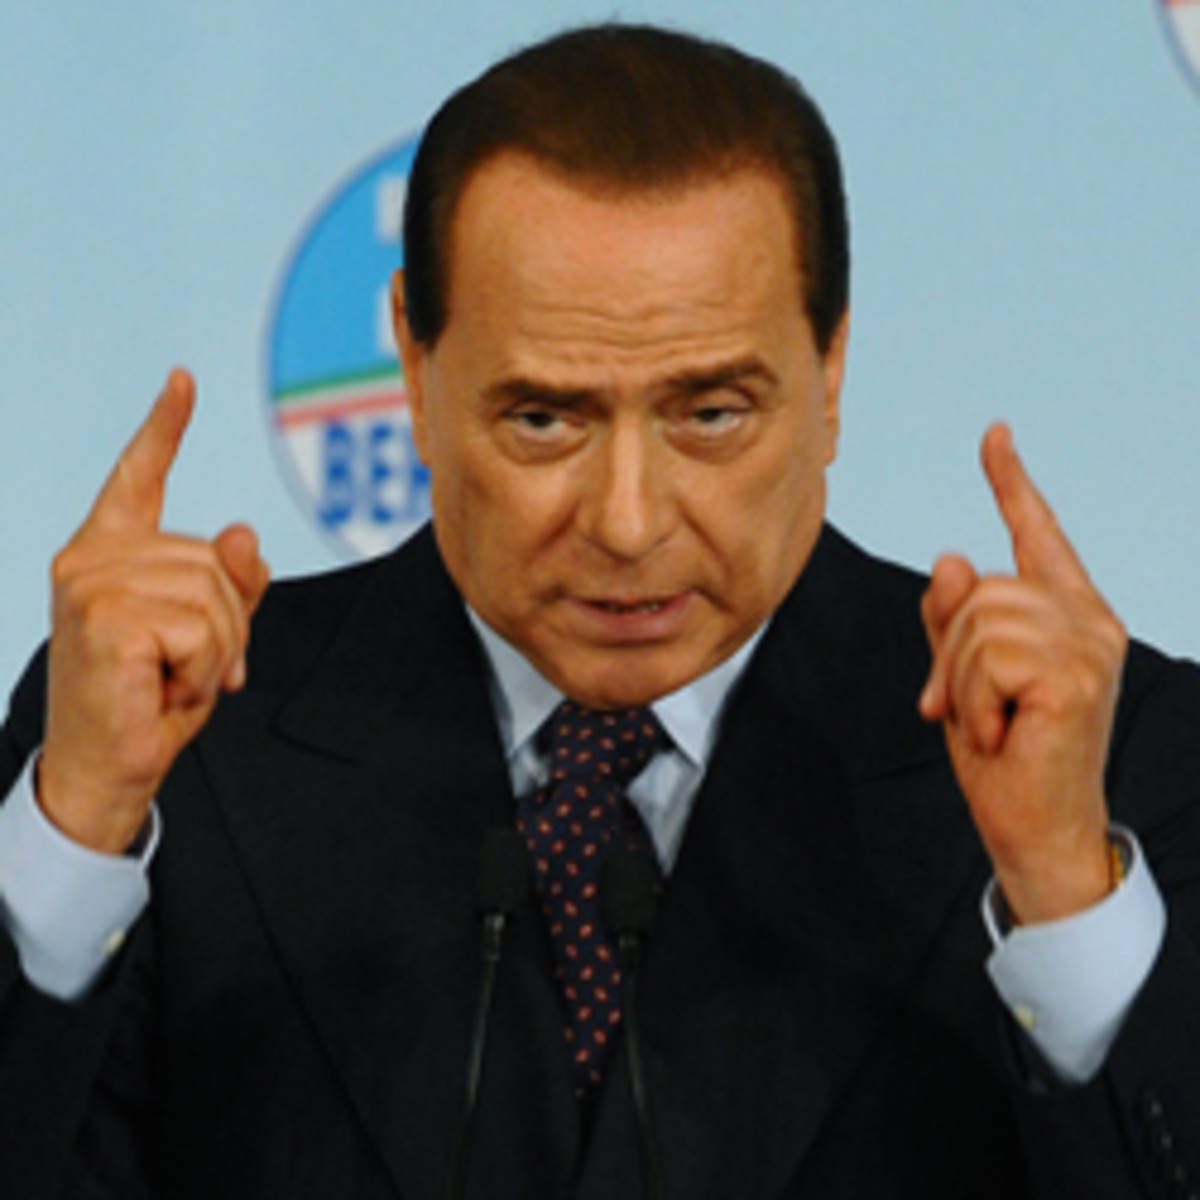 Имя берлускони 7 букв. Сильвио Берлускони. Берлускони 2006. Меркель Берлускони Саркози. Сильвио Берлускони рост.